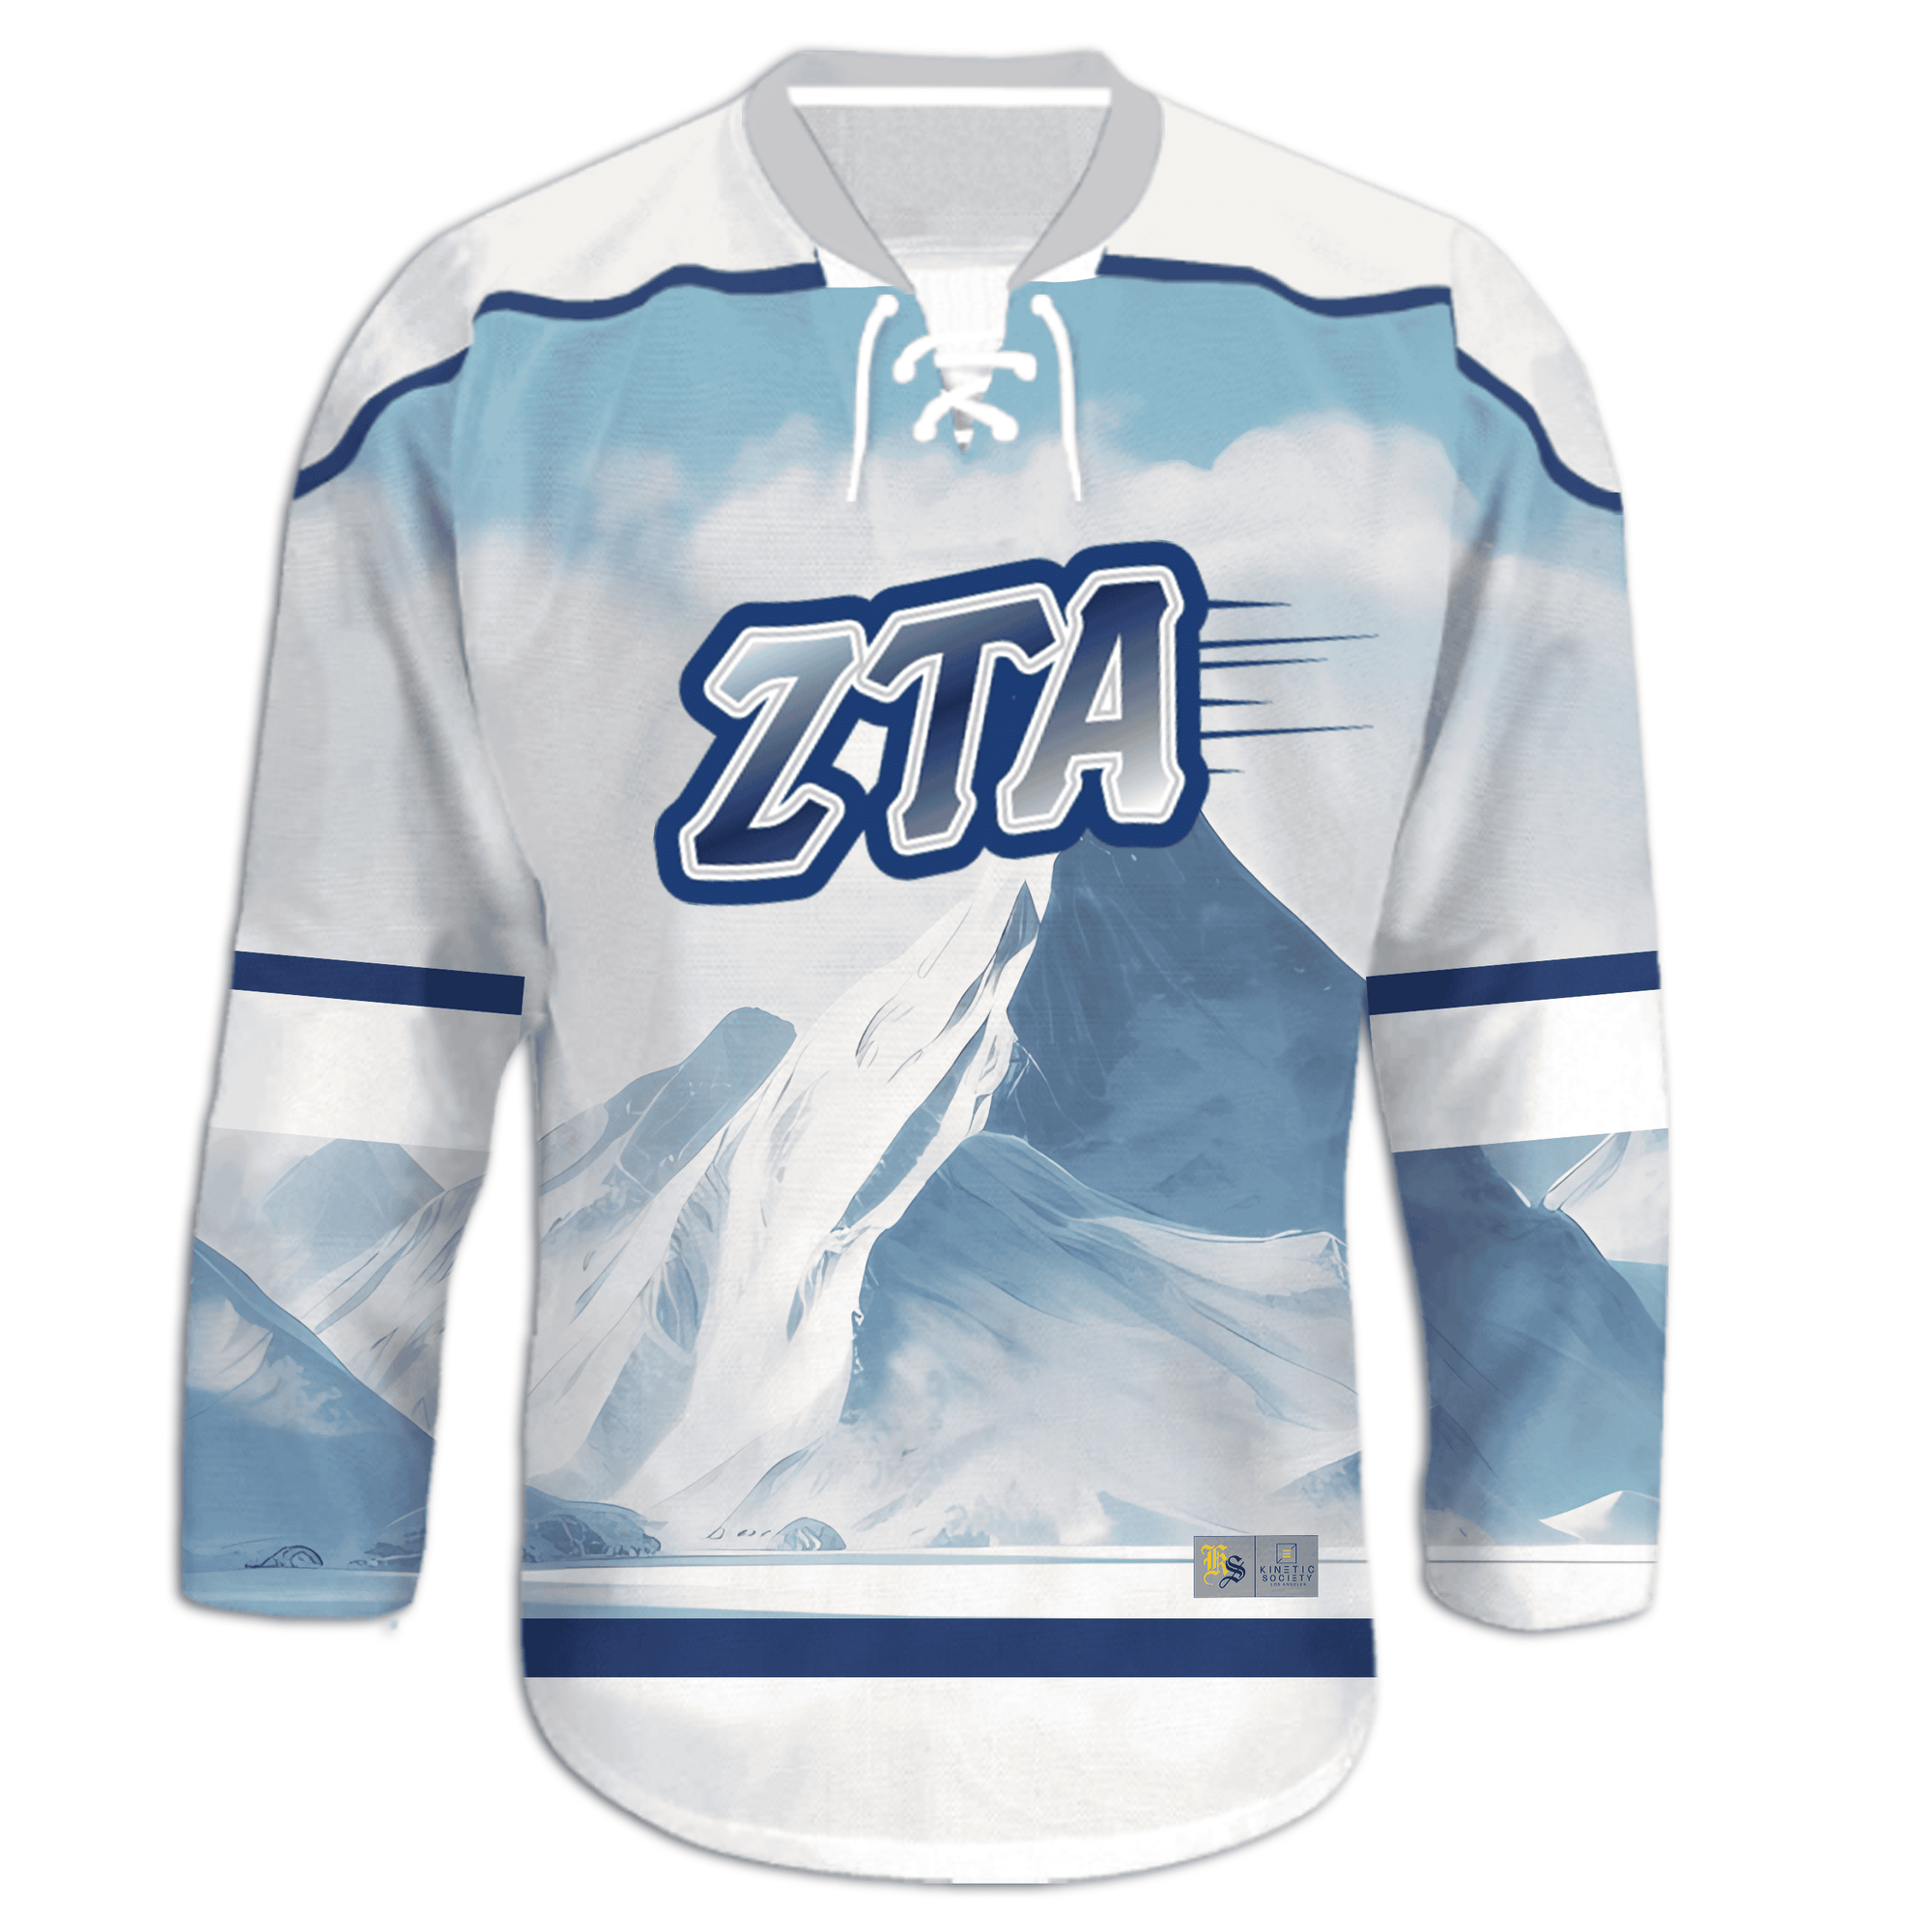 Zeta Tau Alpha - Avalance Hockey Jersey